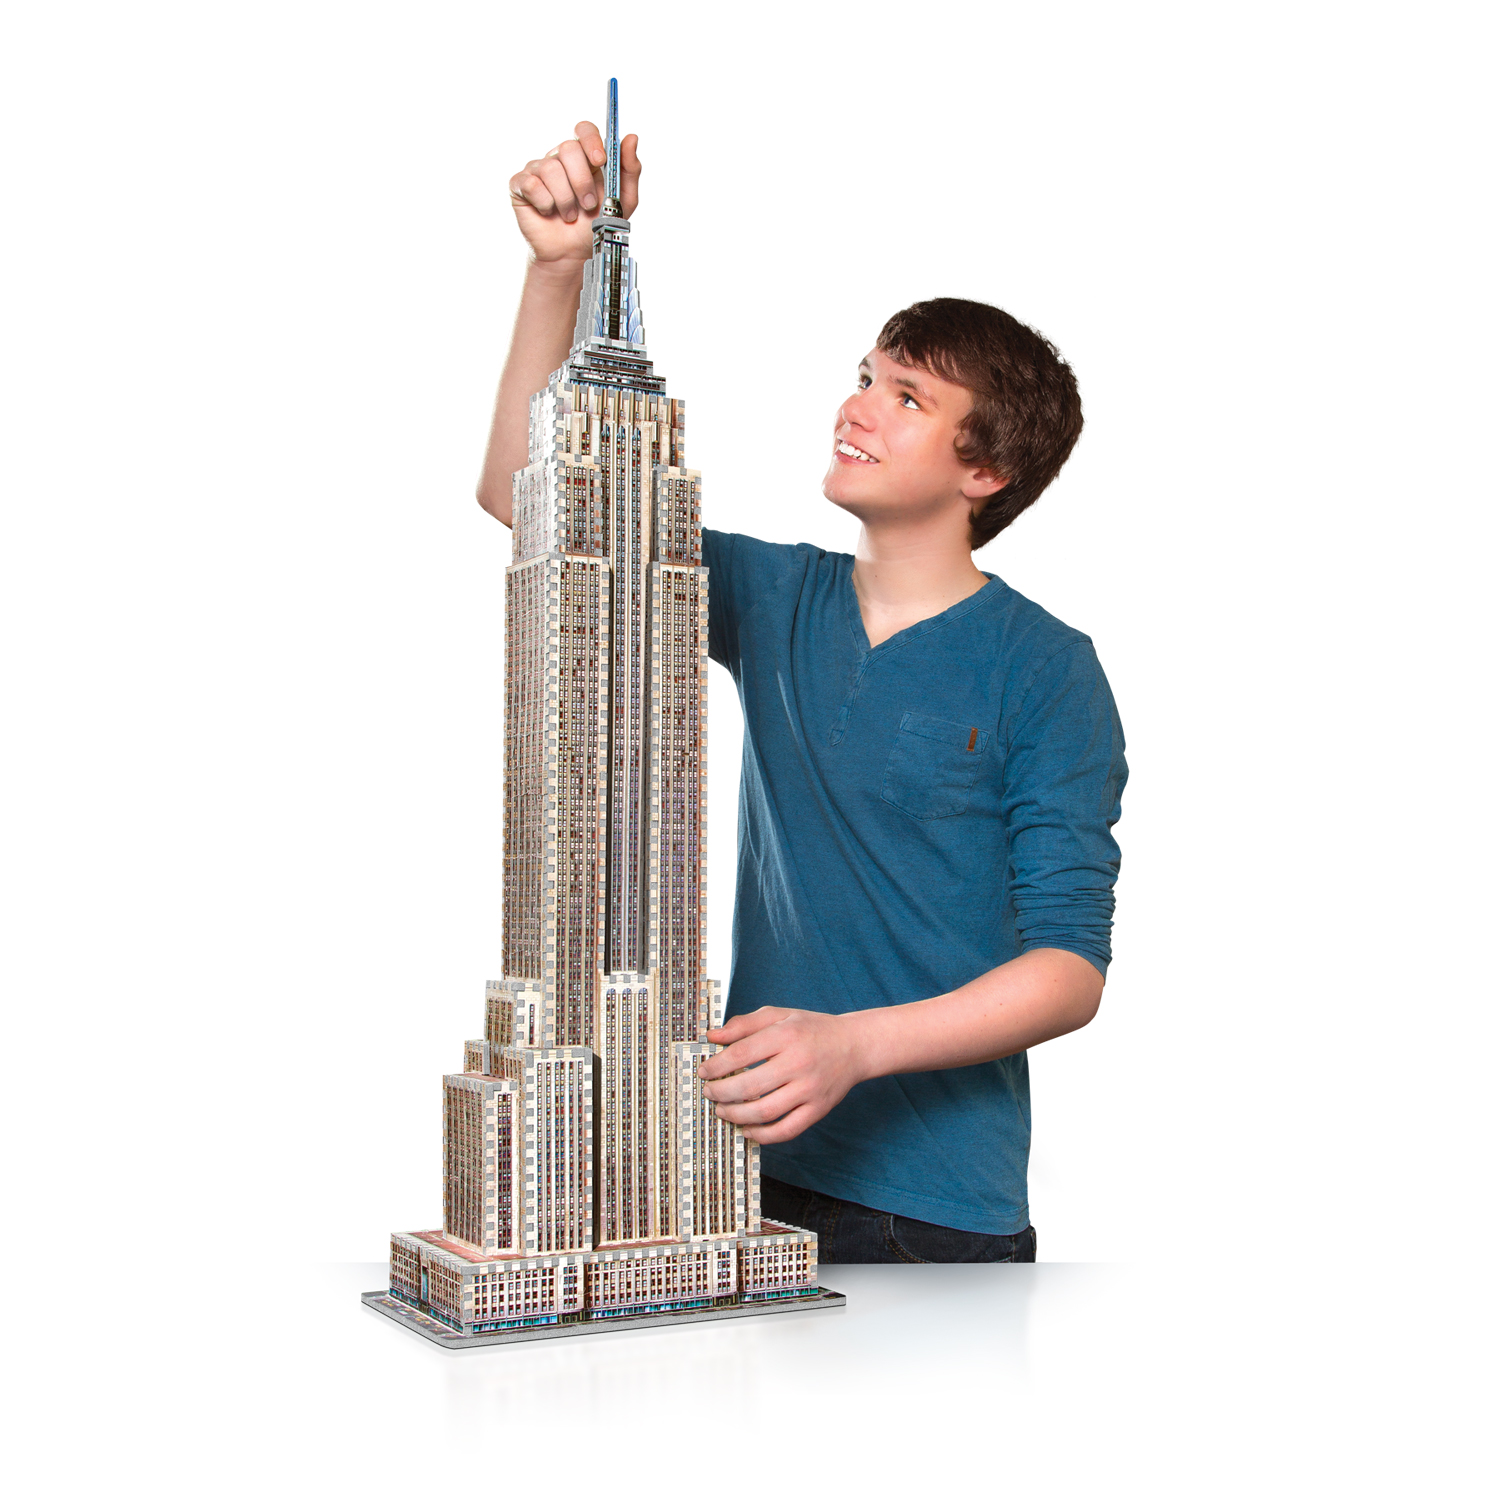 Folia bastelpackung 3d-modello Empire State Building 3d Puzzle 55 pezzi 34004 